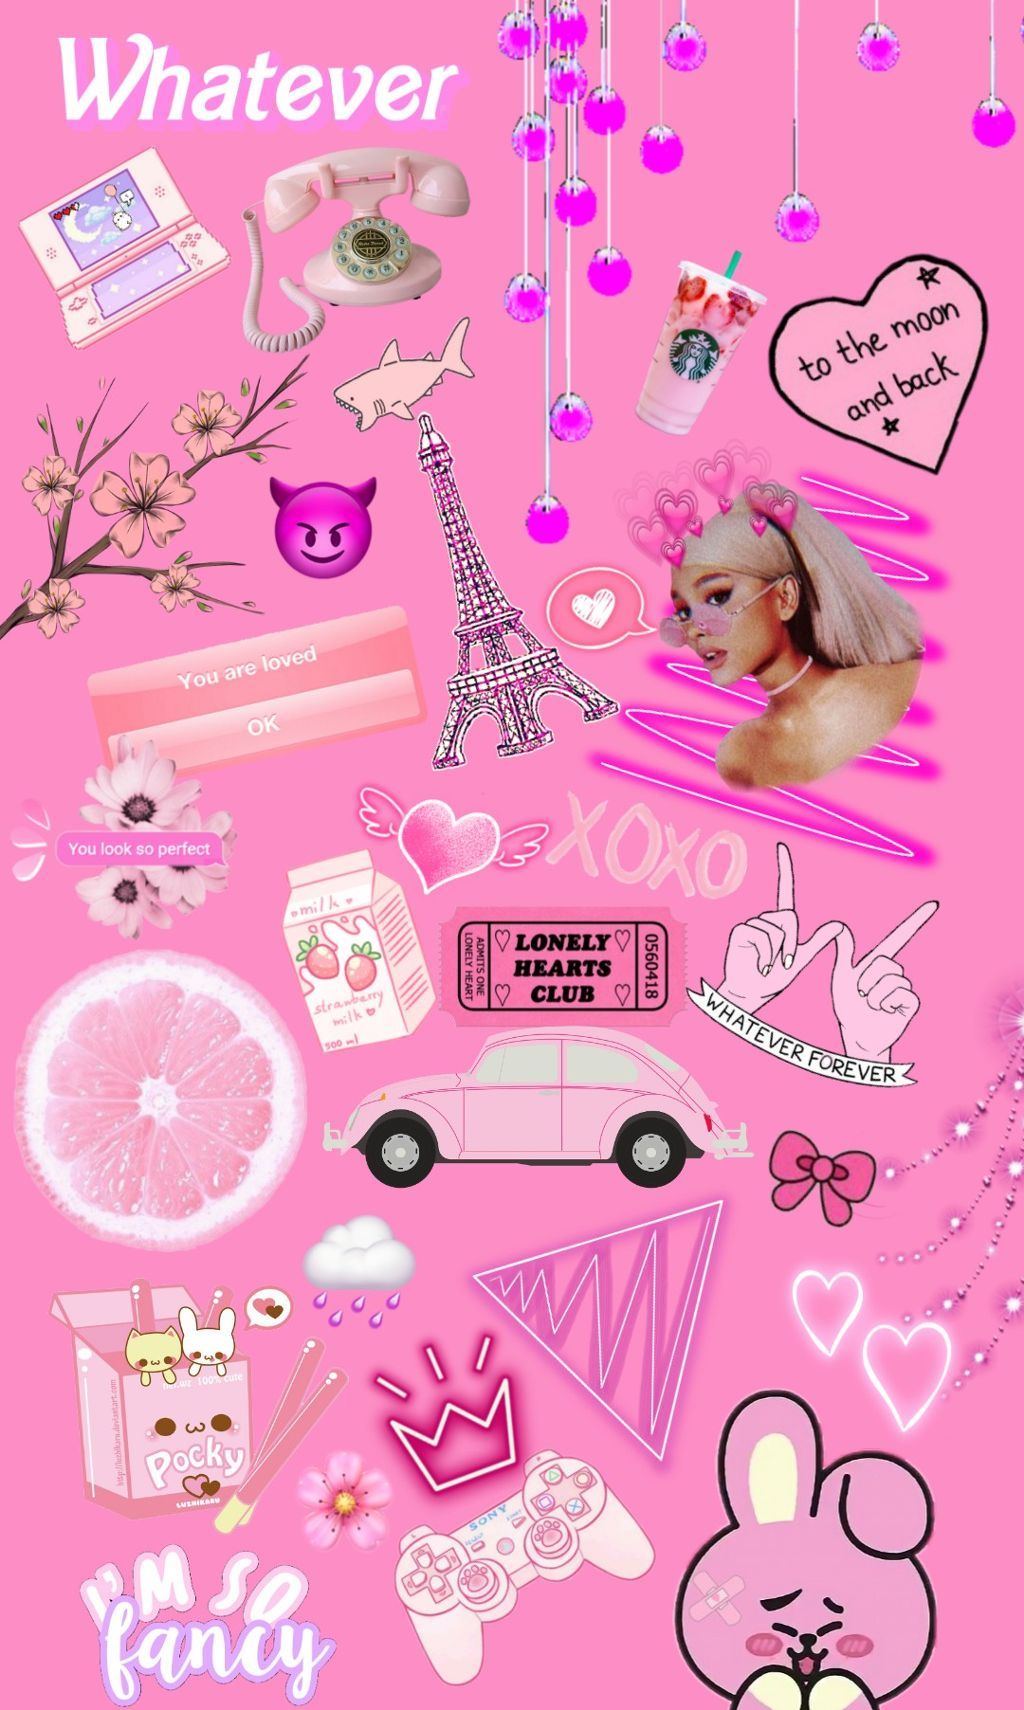 Arriba 61+ imagen tumblr aesthetic pink background - Thcshoanghoatham ...